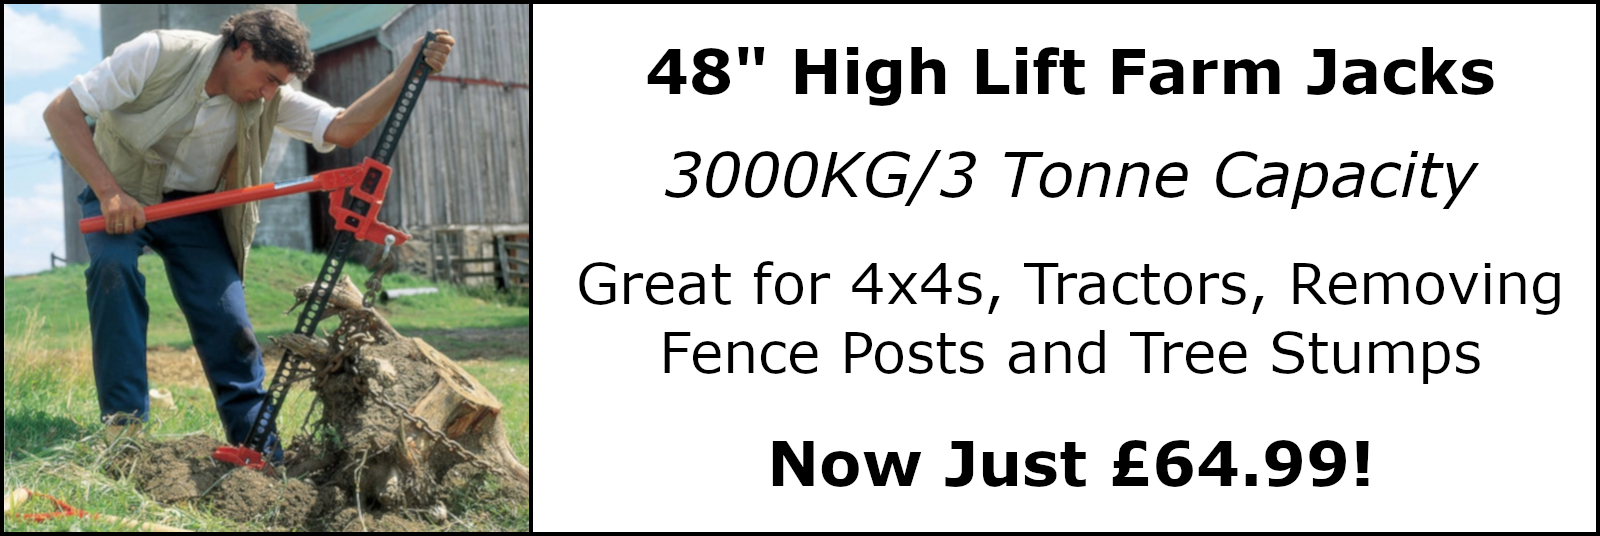 3000KG High Lift Farm Jacks